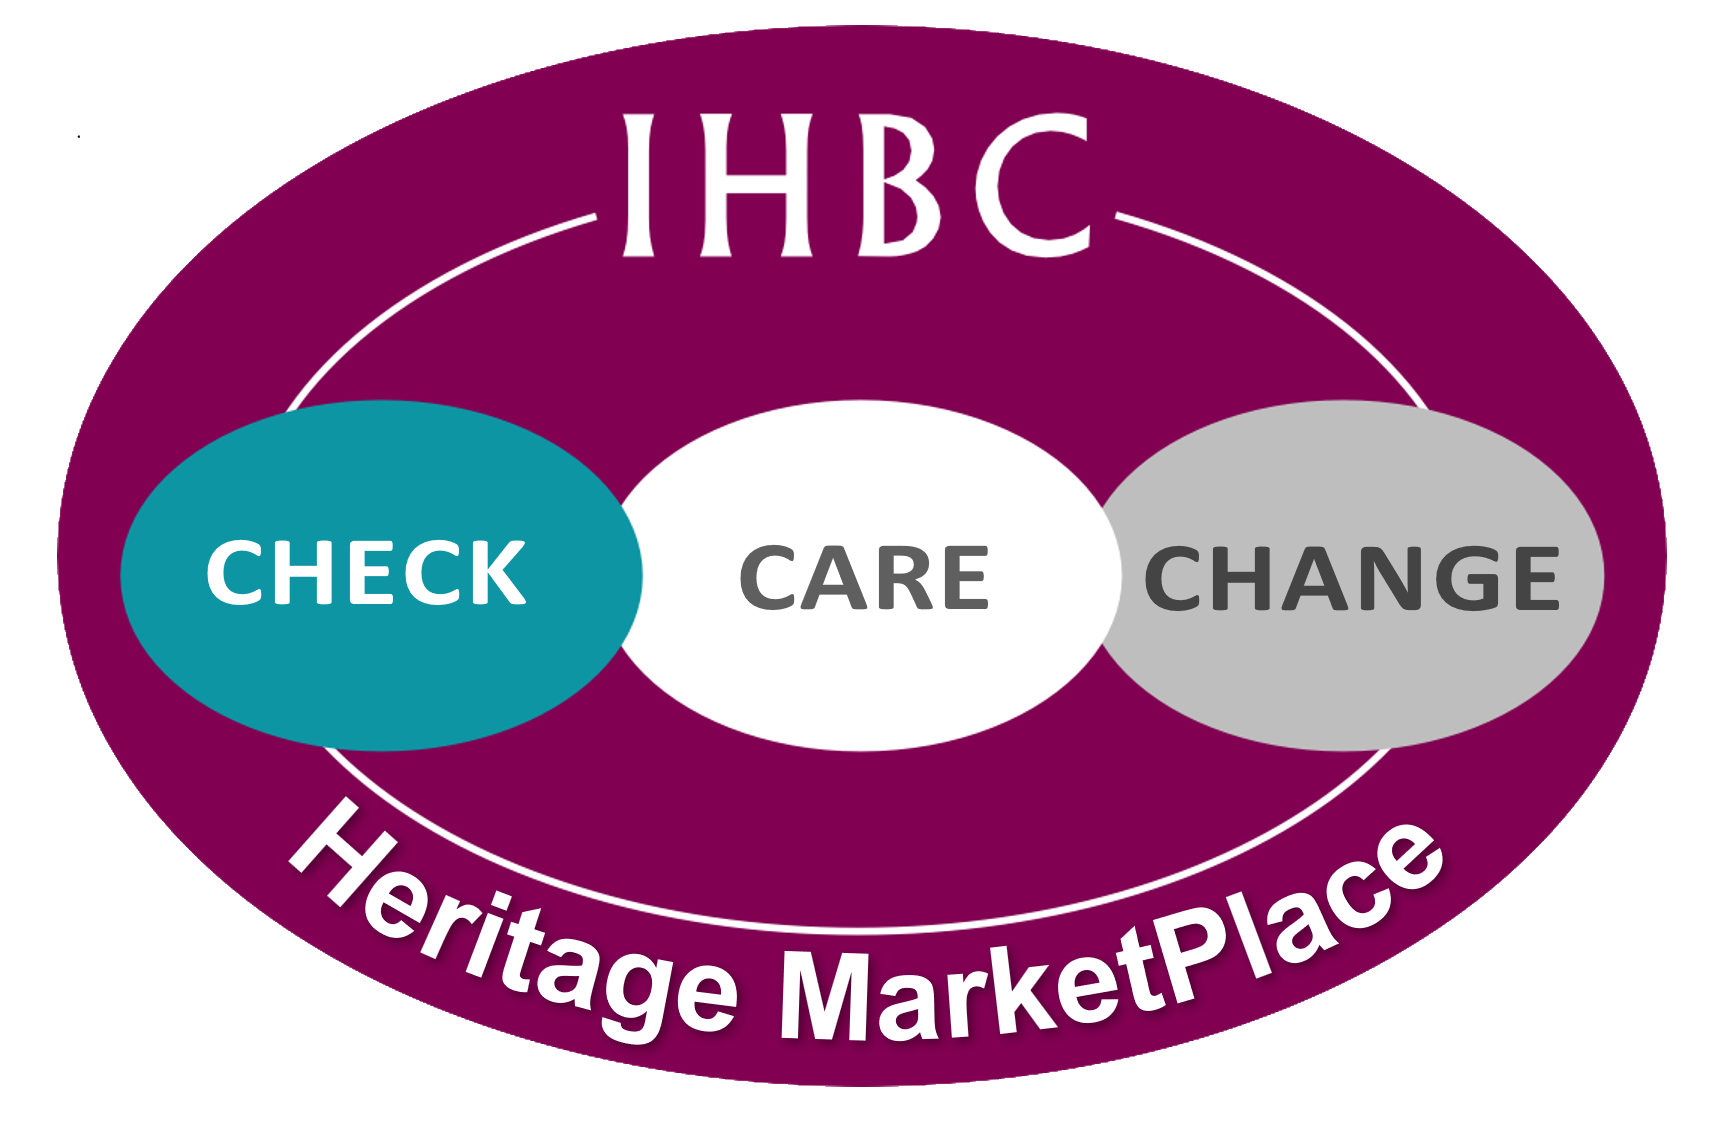 IHBC Heritage MarketPlace